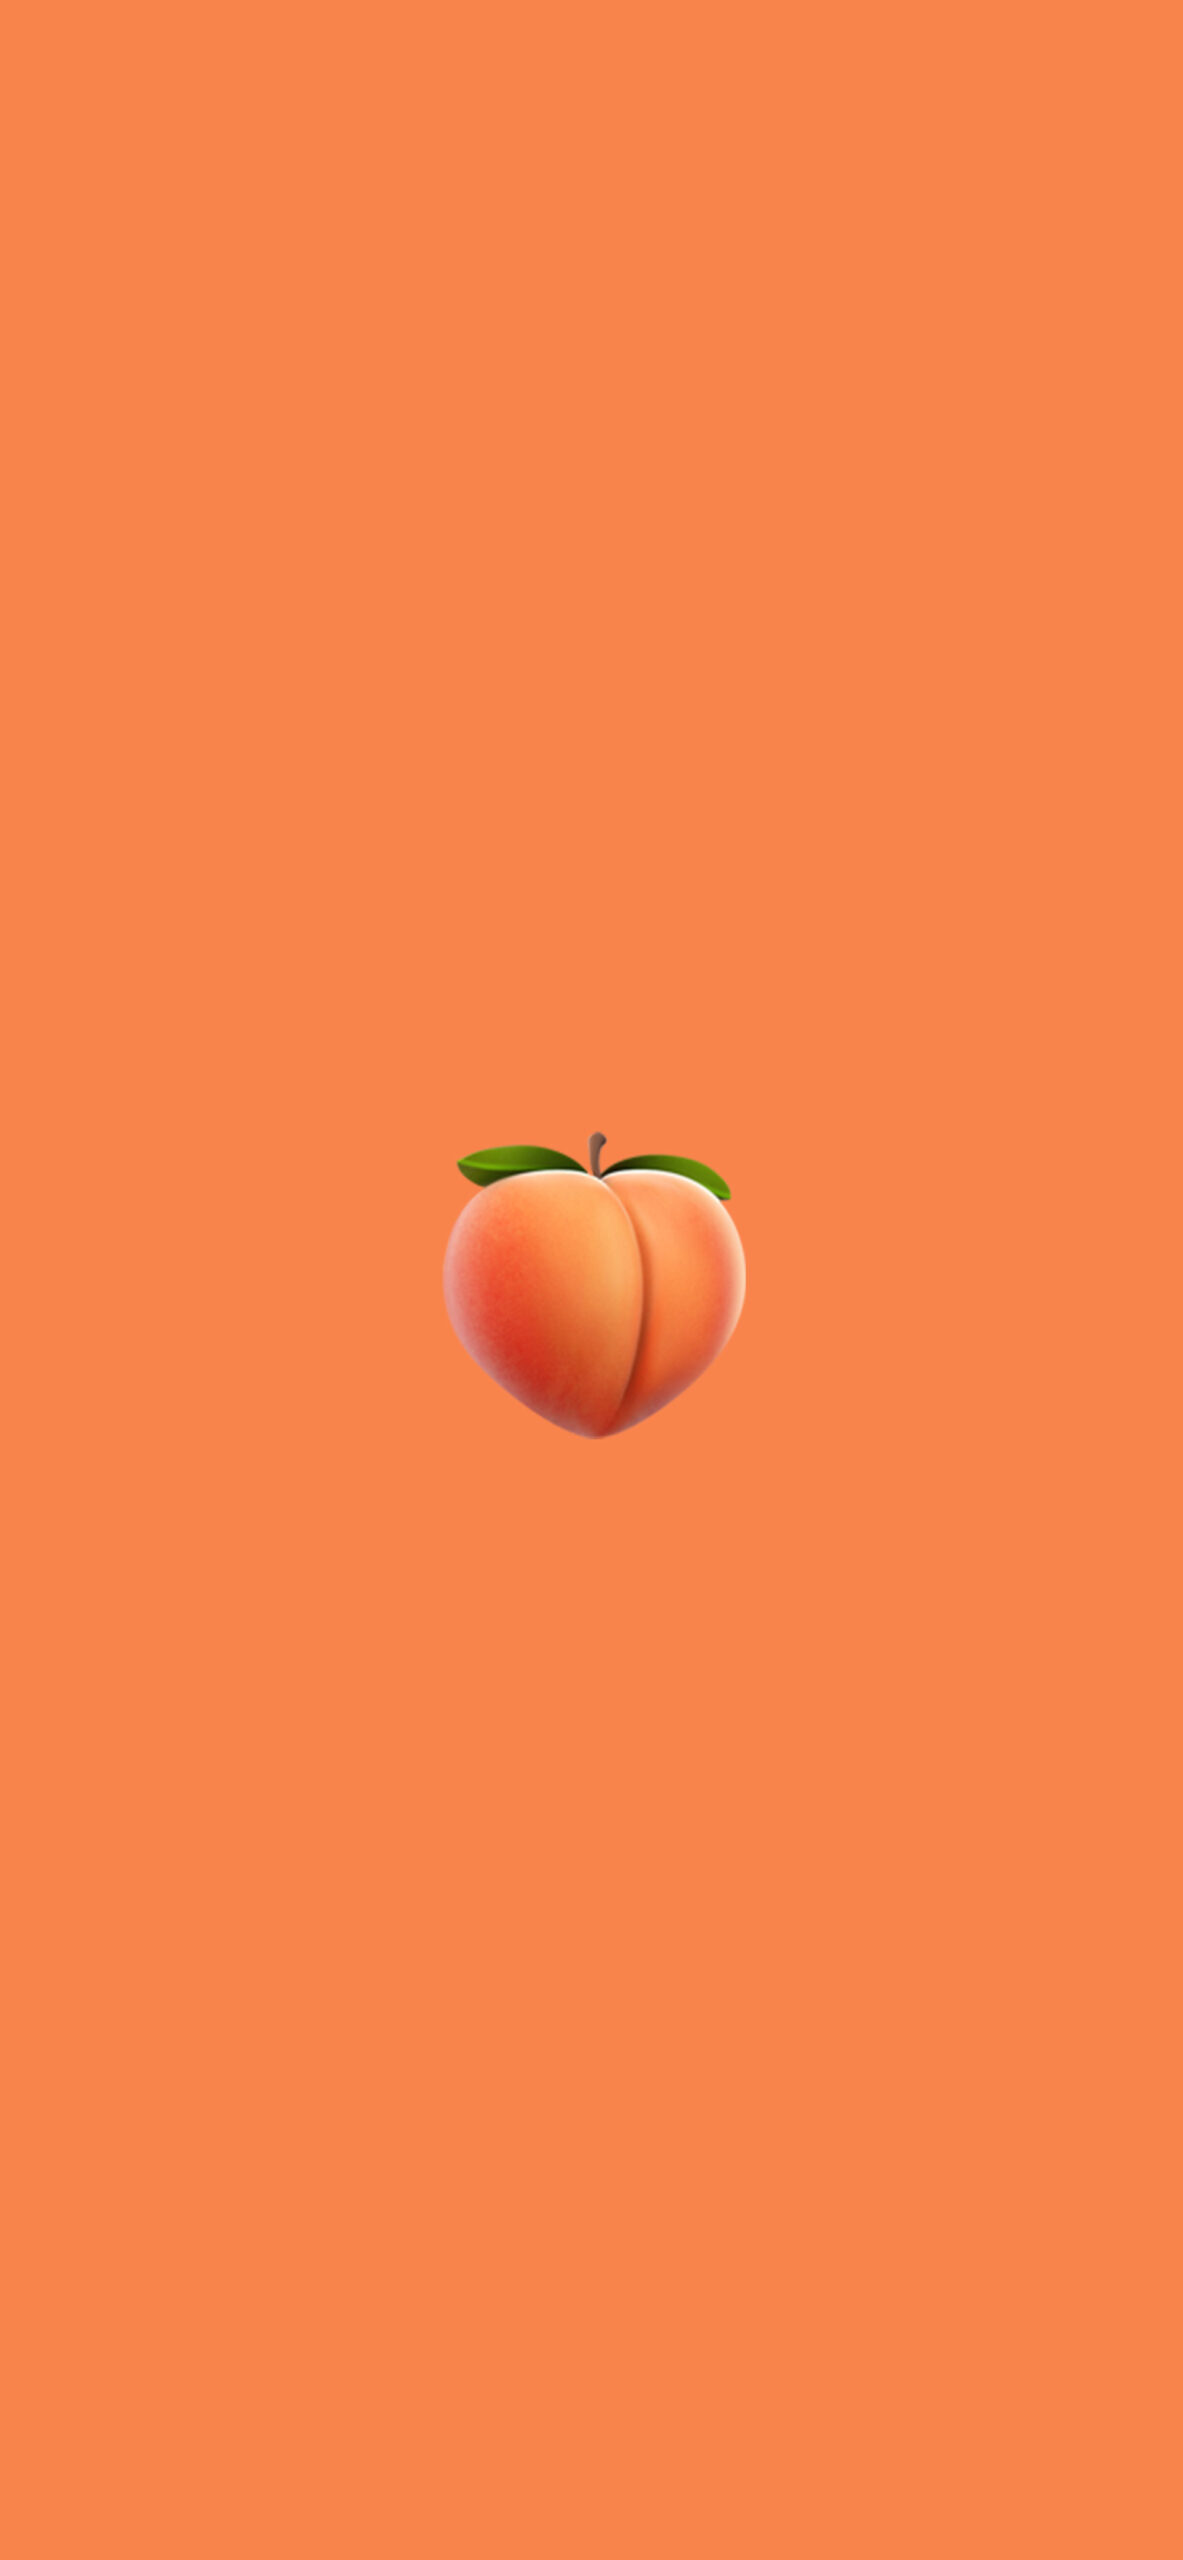 peach emoji aesthetic wallpaper